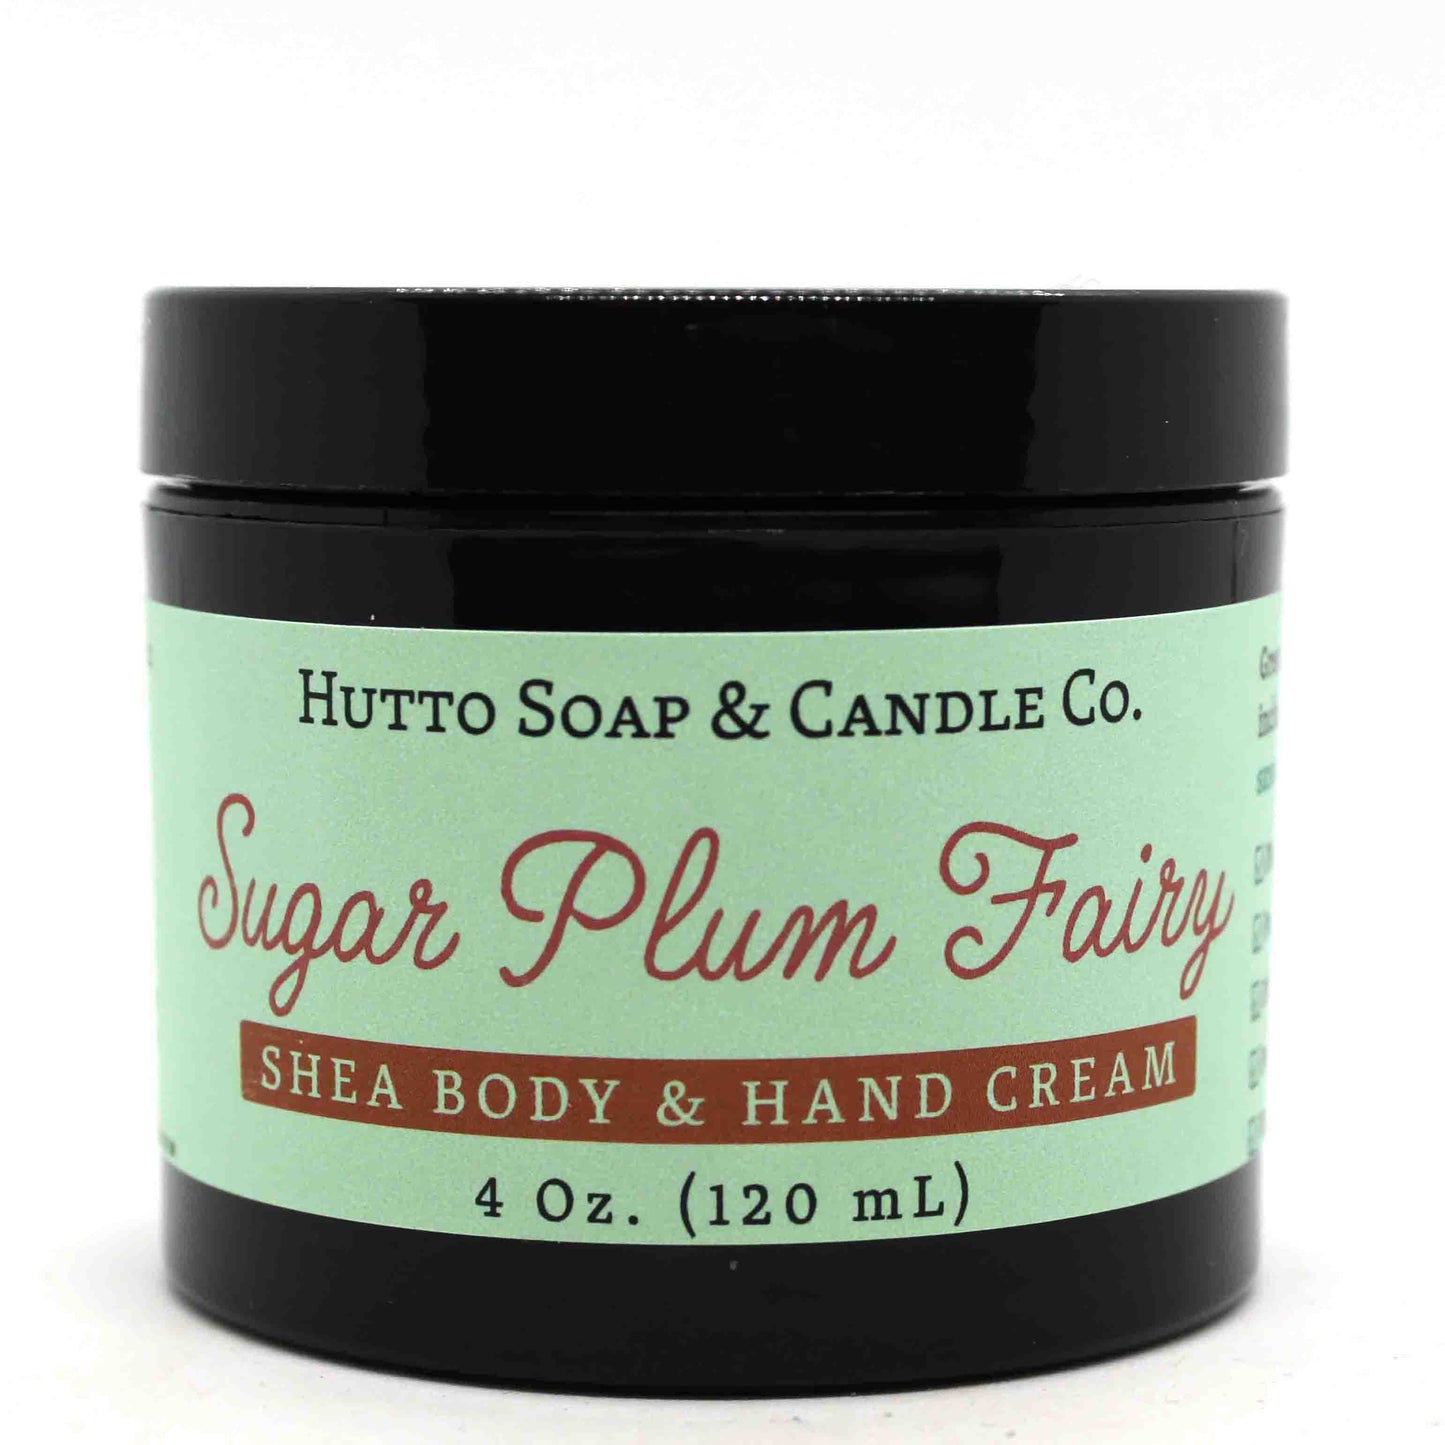 Sugar Plum Fairy Shea Body & Hand Cream